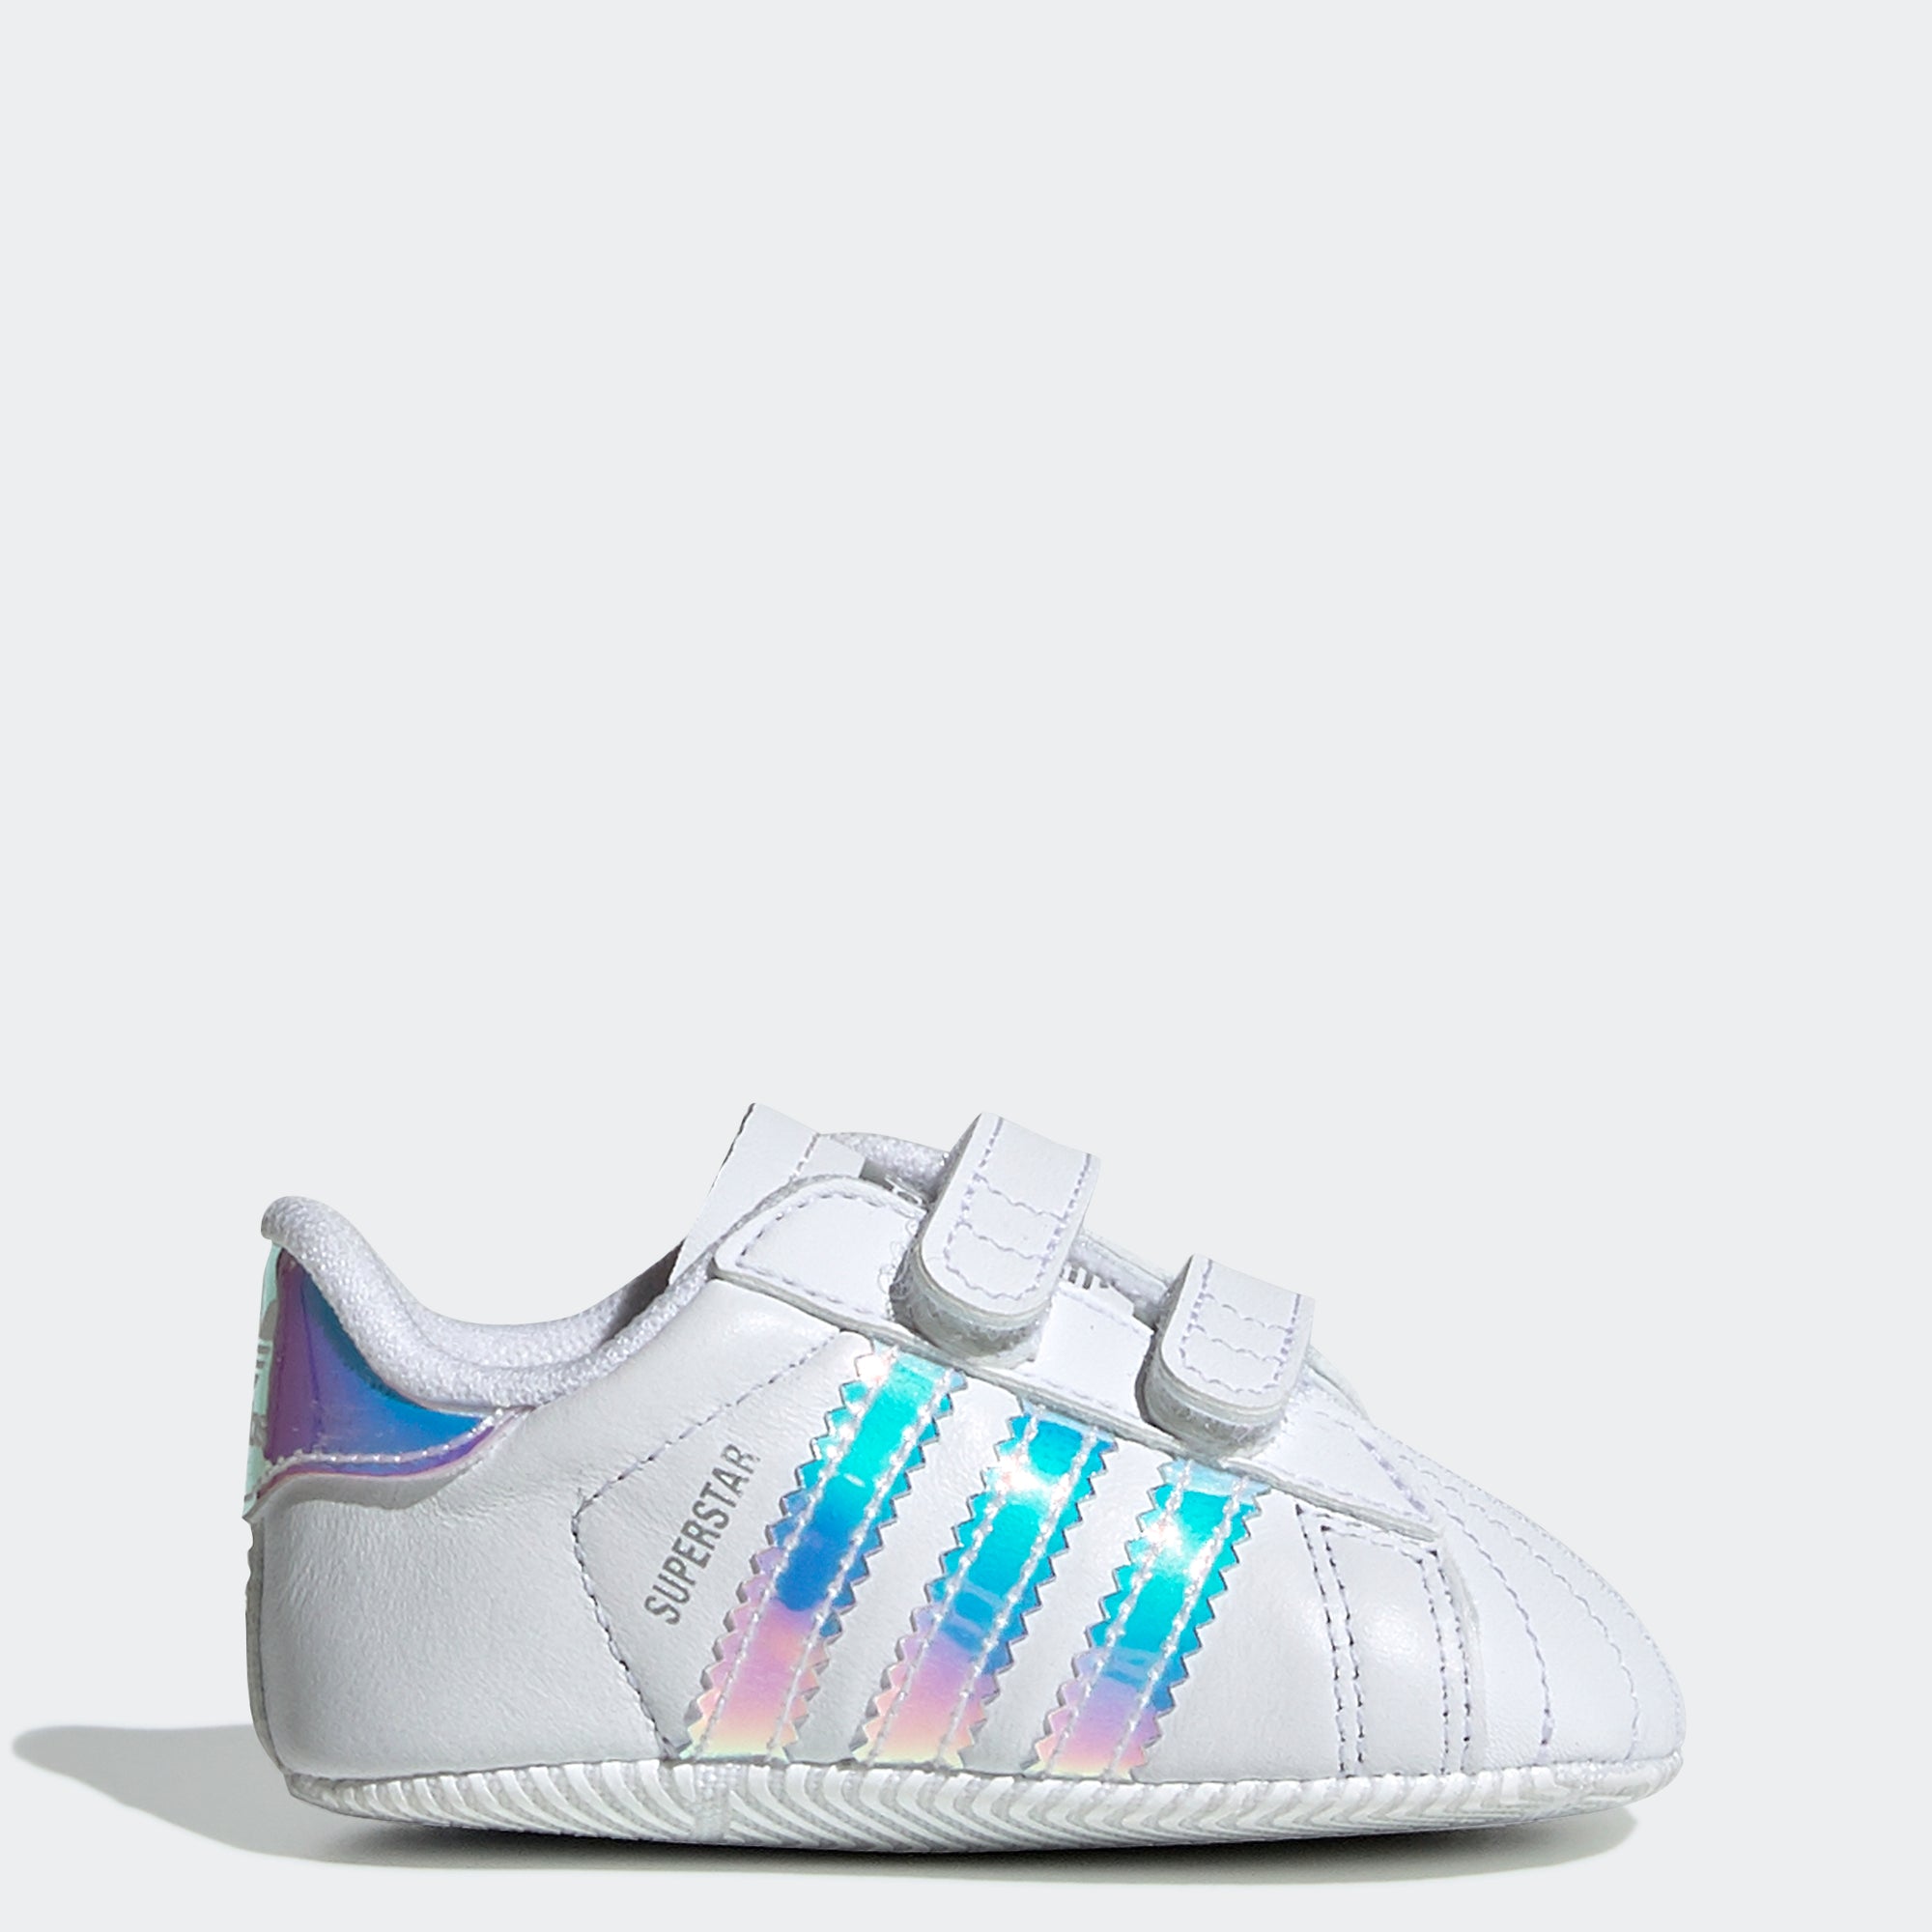 adidas superstar shoes iridescent